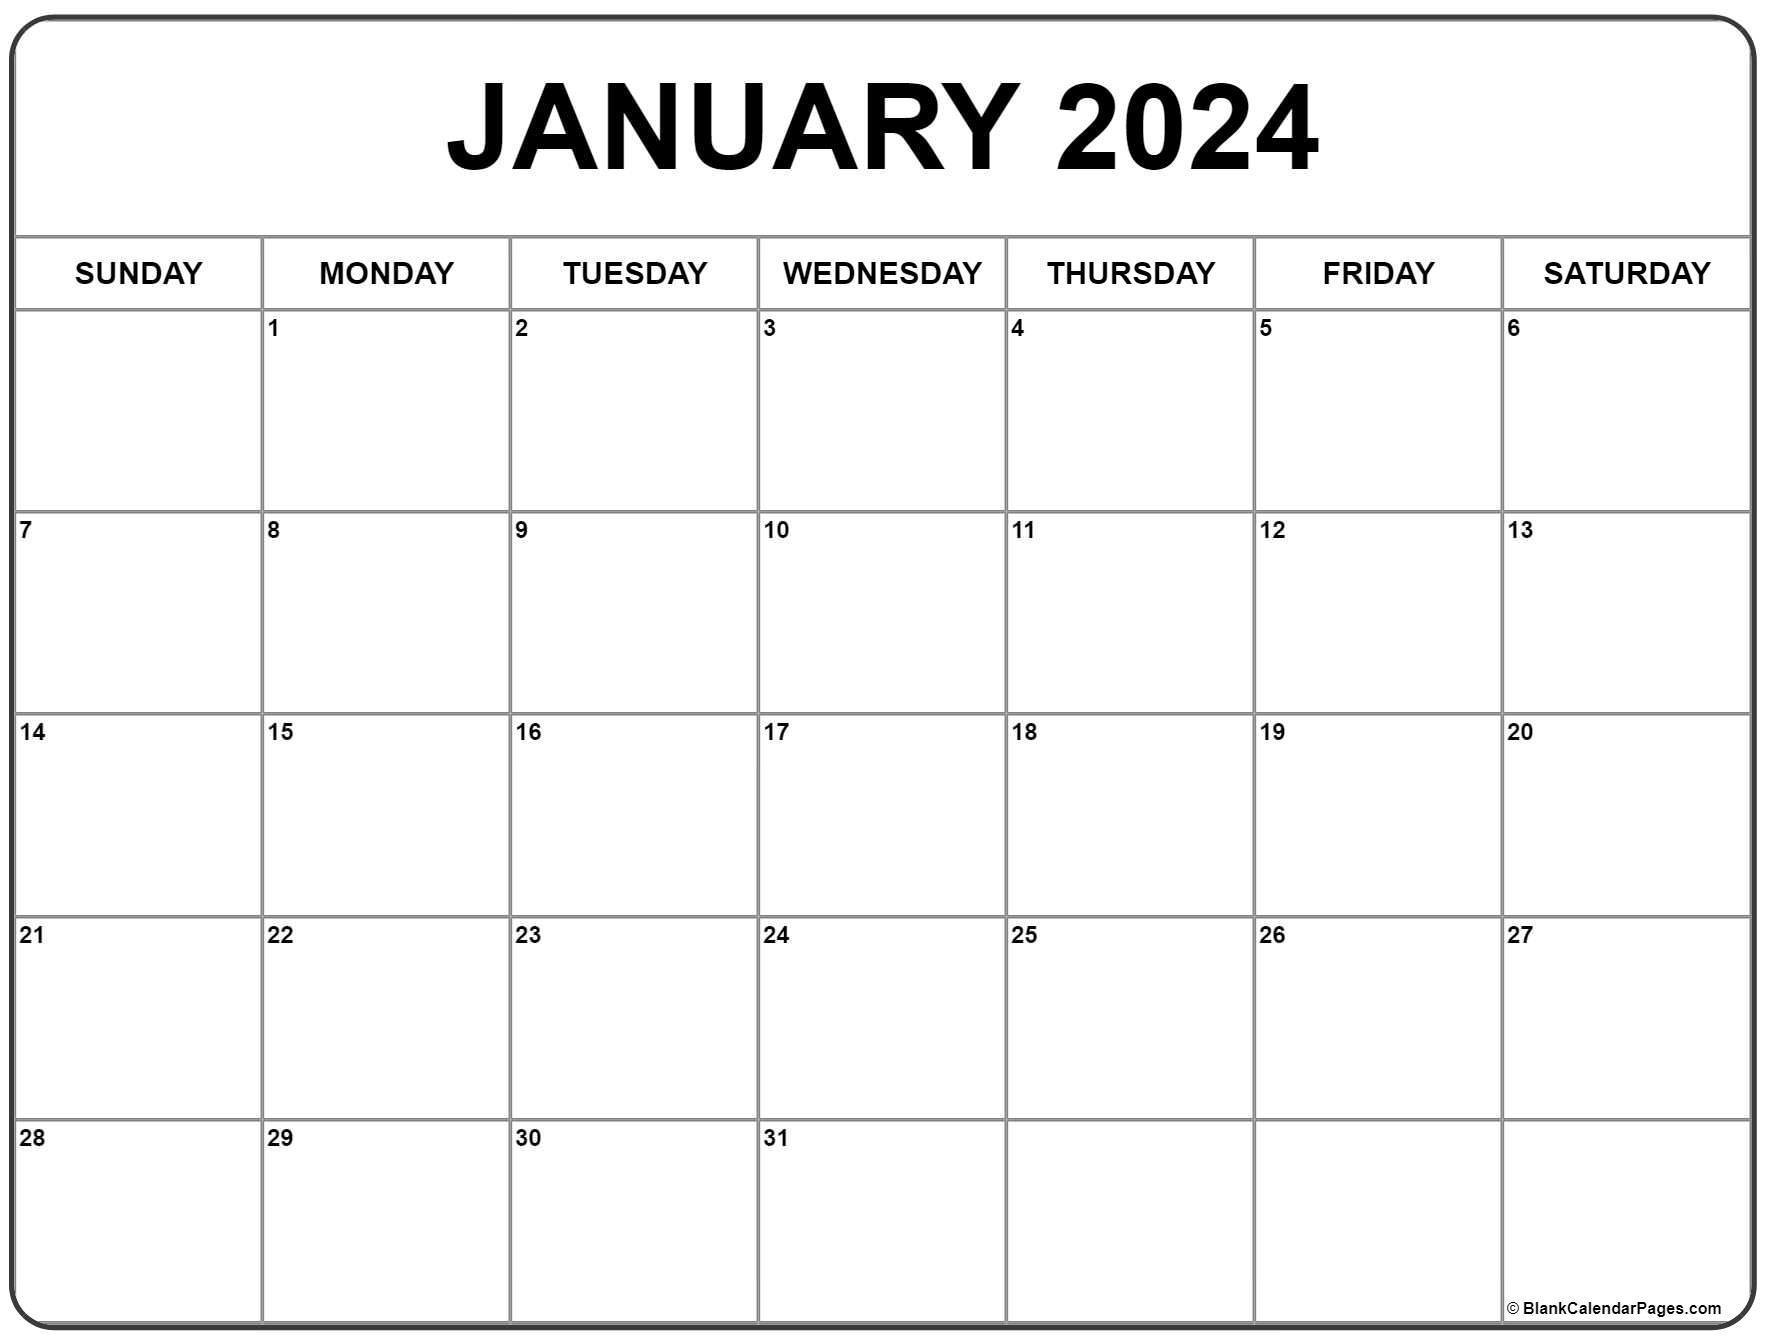 January 2024 Calendar | Free Printable Calendar in Free Printable Blank Calendar Pages 2024